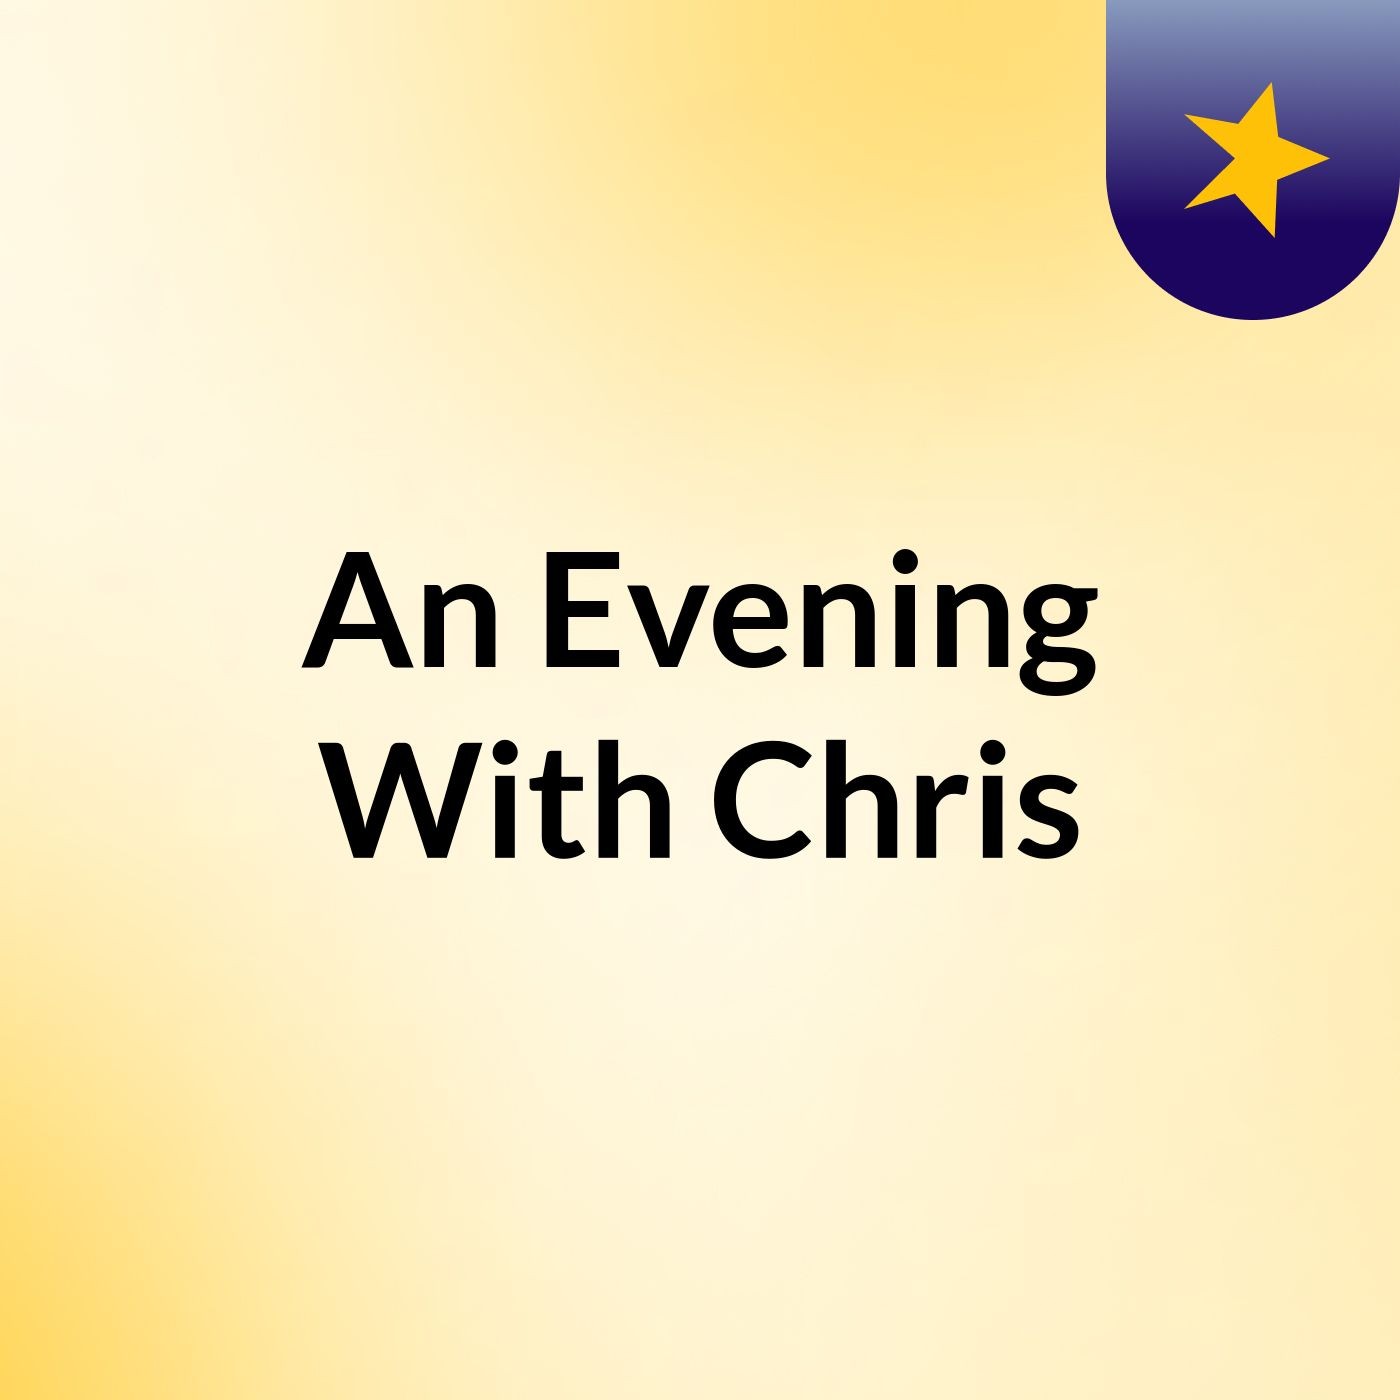 An Evening With Chris